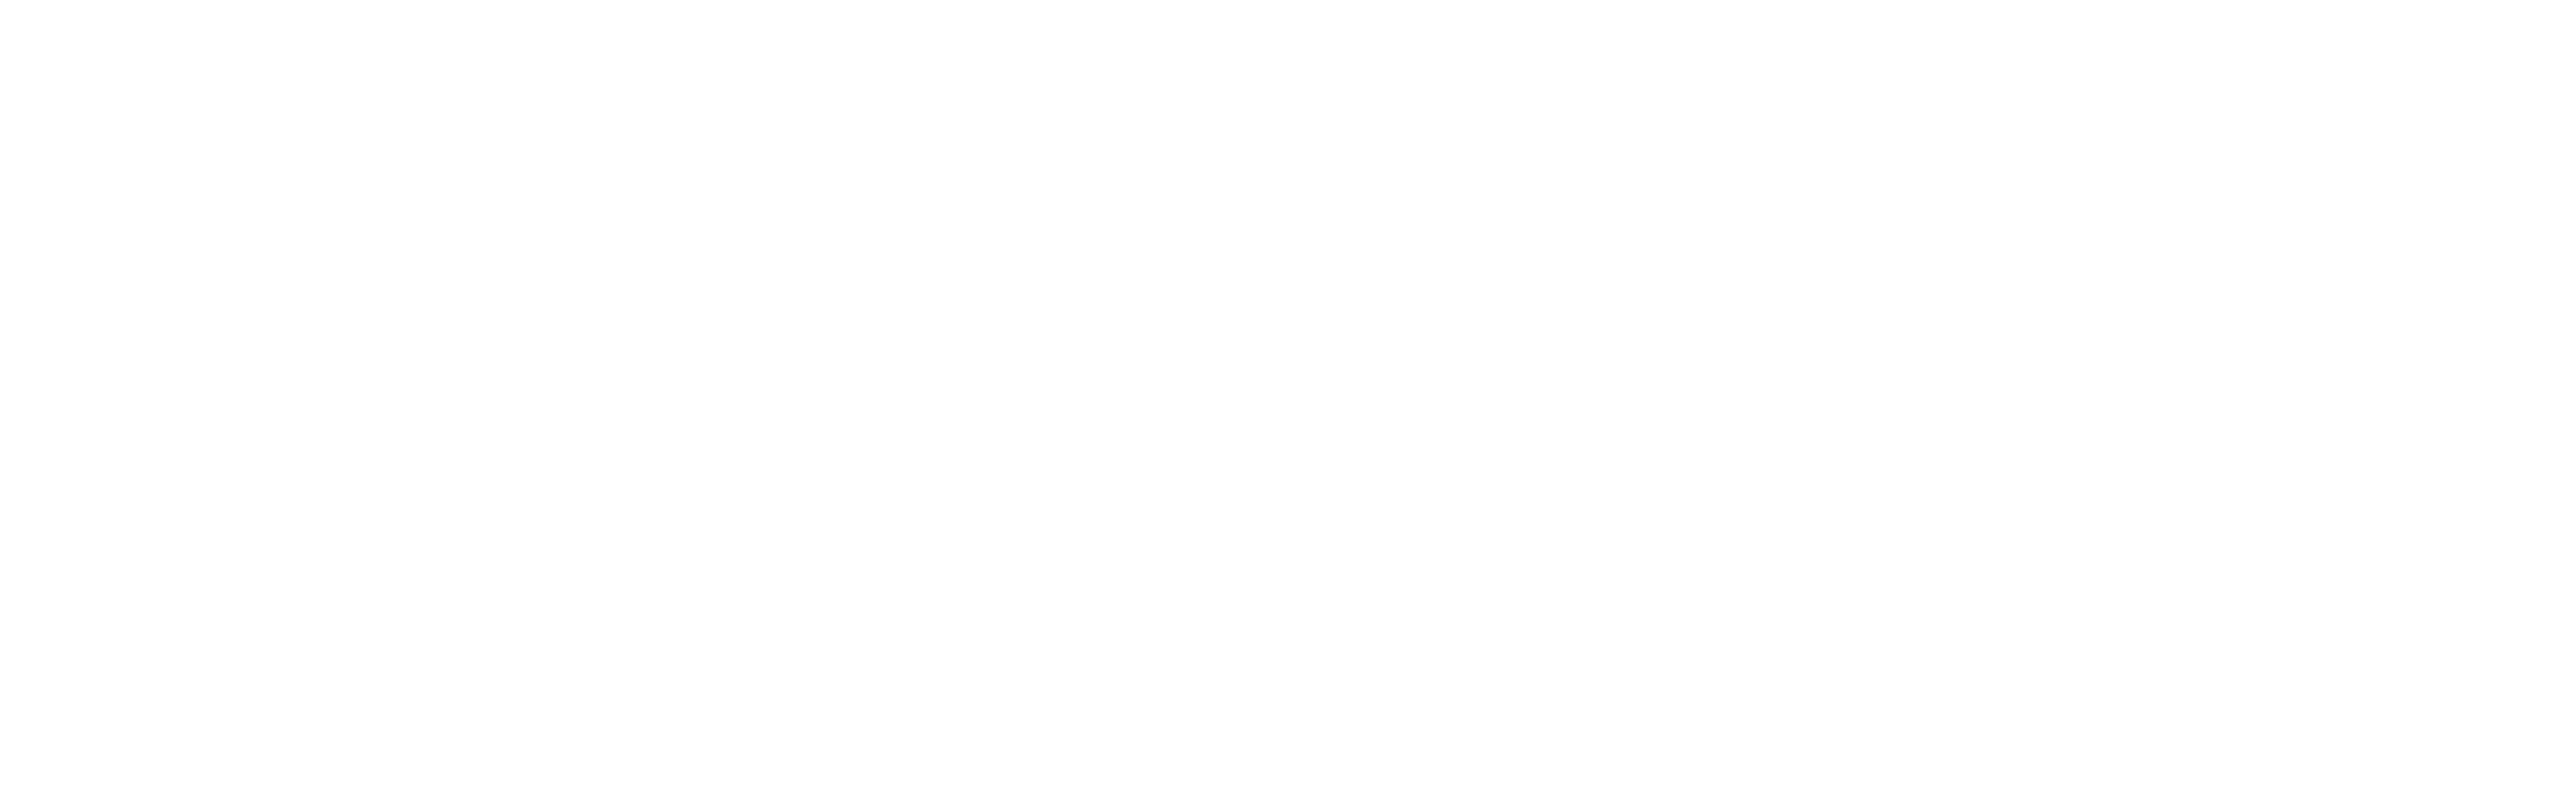 AmericanTCS White logo